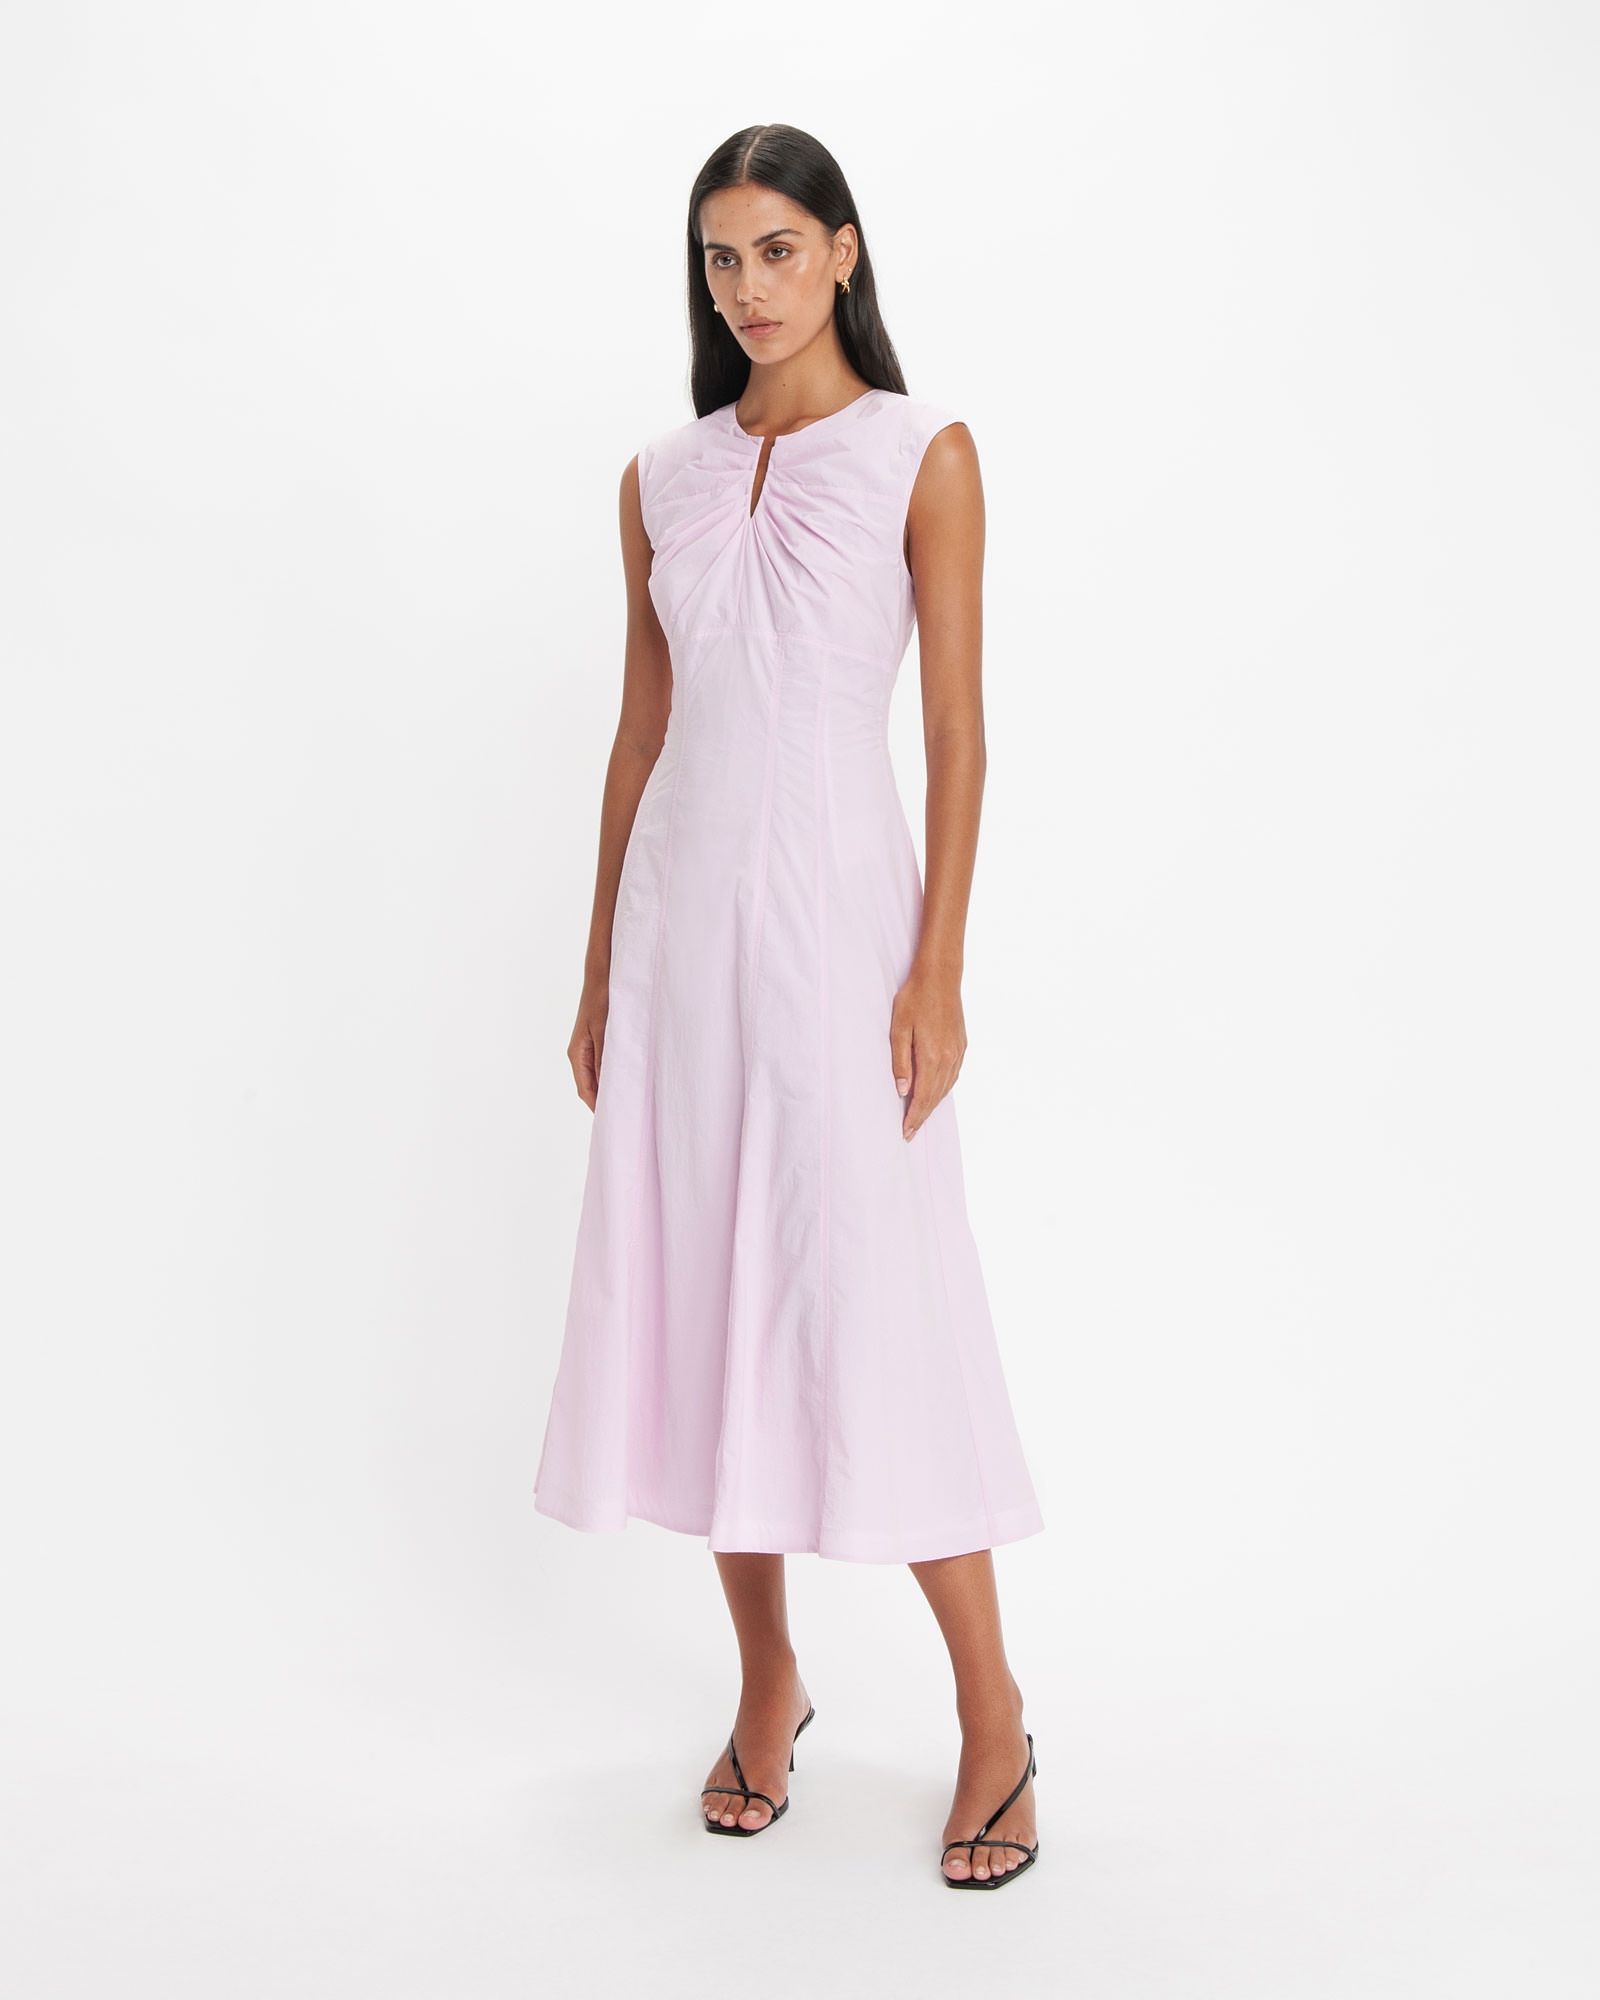 U-Bar Neckline Midi Dress | Buy Dresses Online - Cue